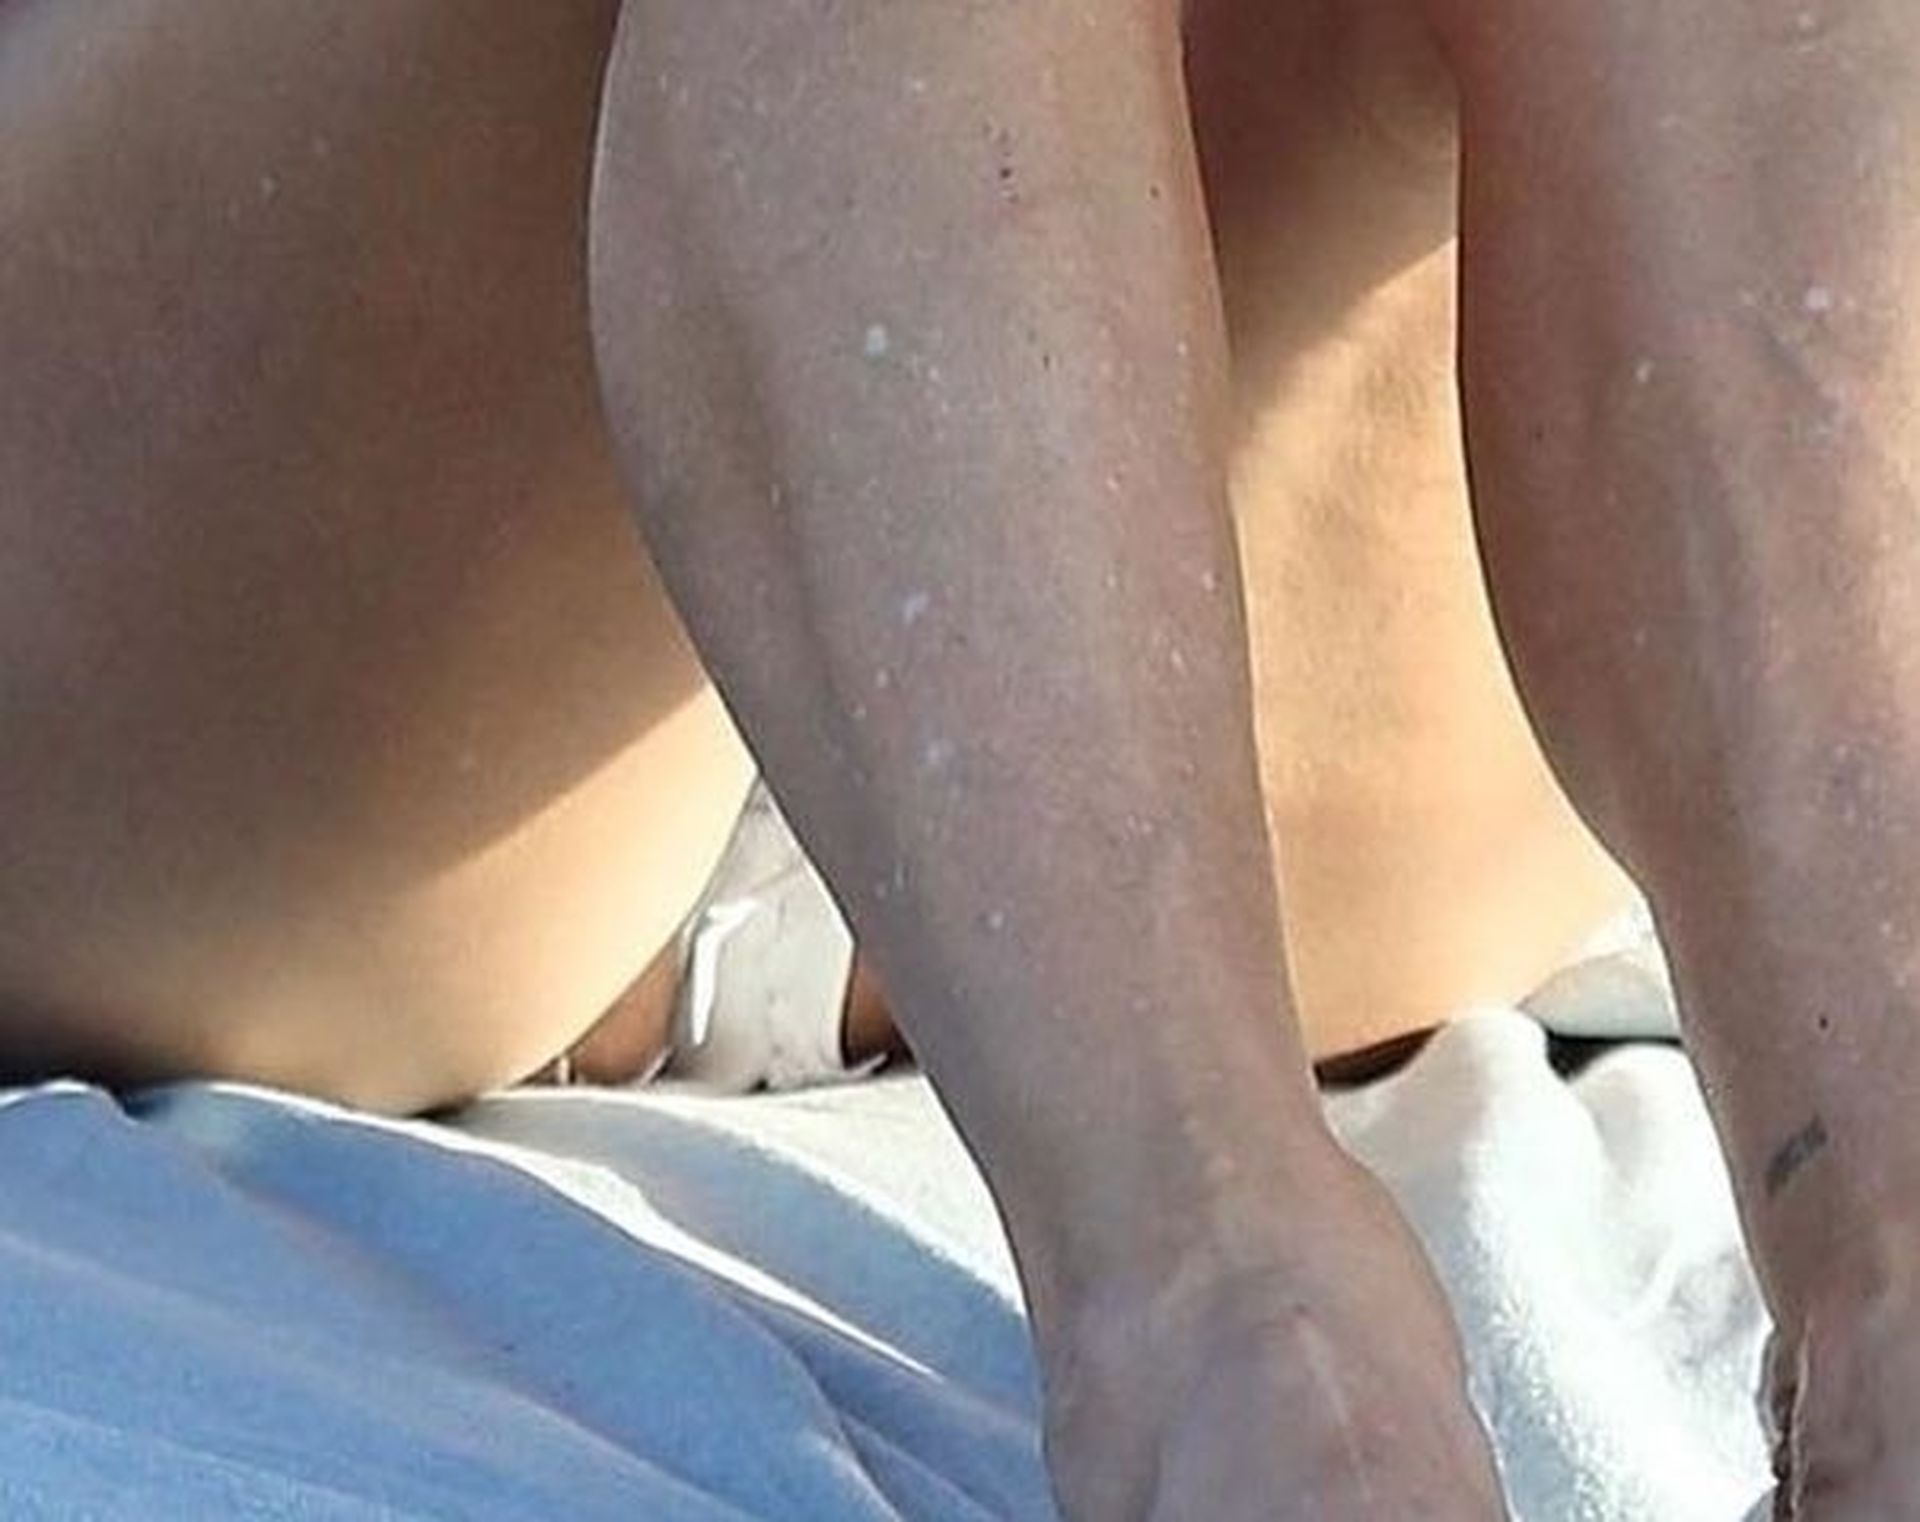 Jane Flemming Is Looking Great as She Sunbathes on Bondi Beach (9 Photos)